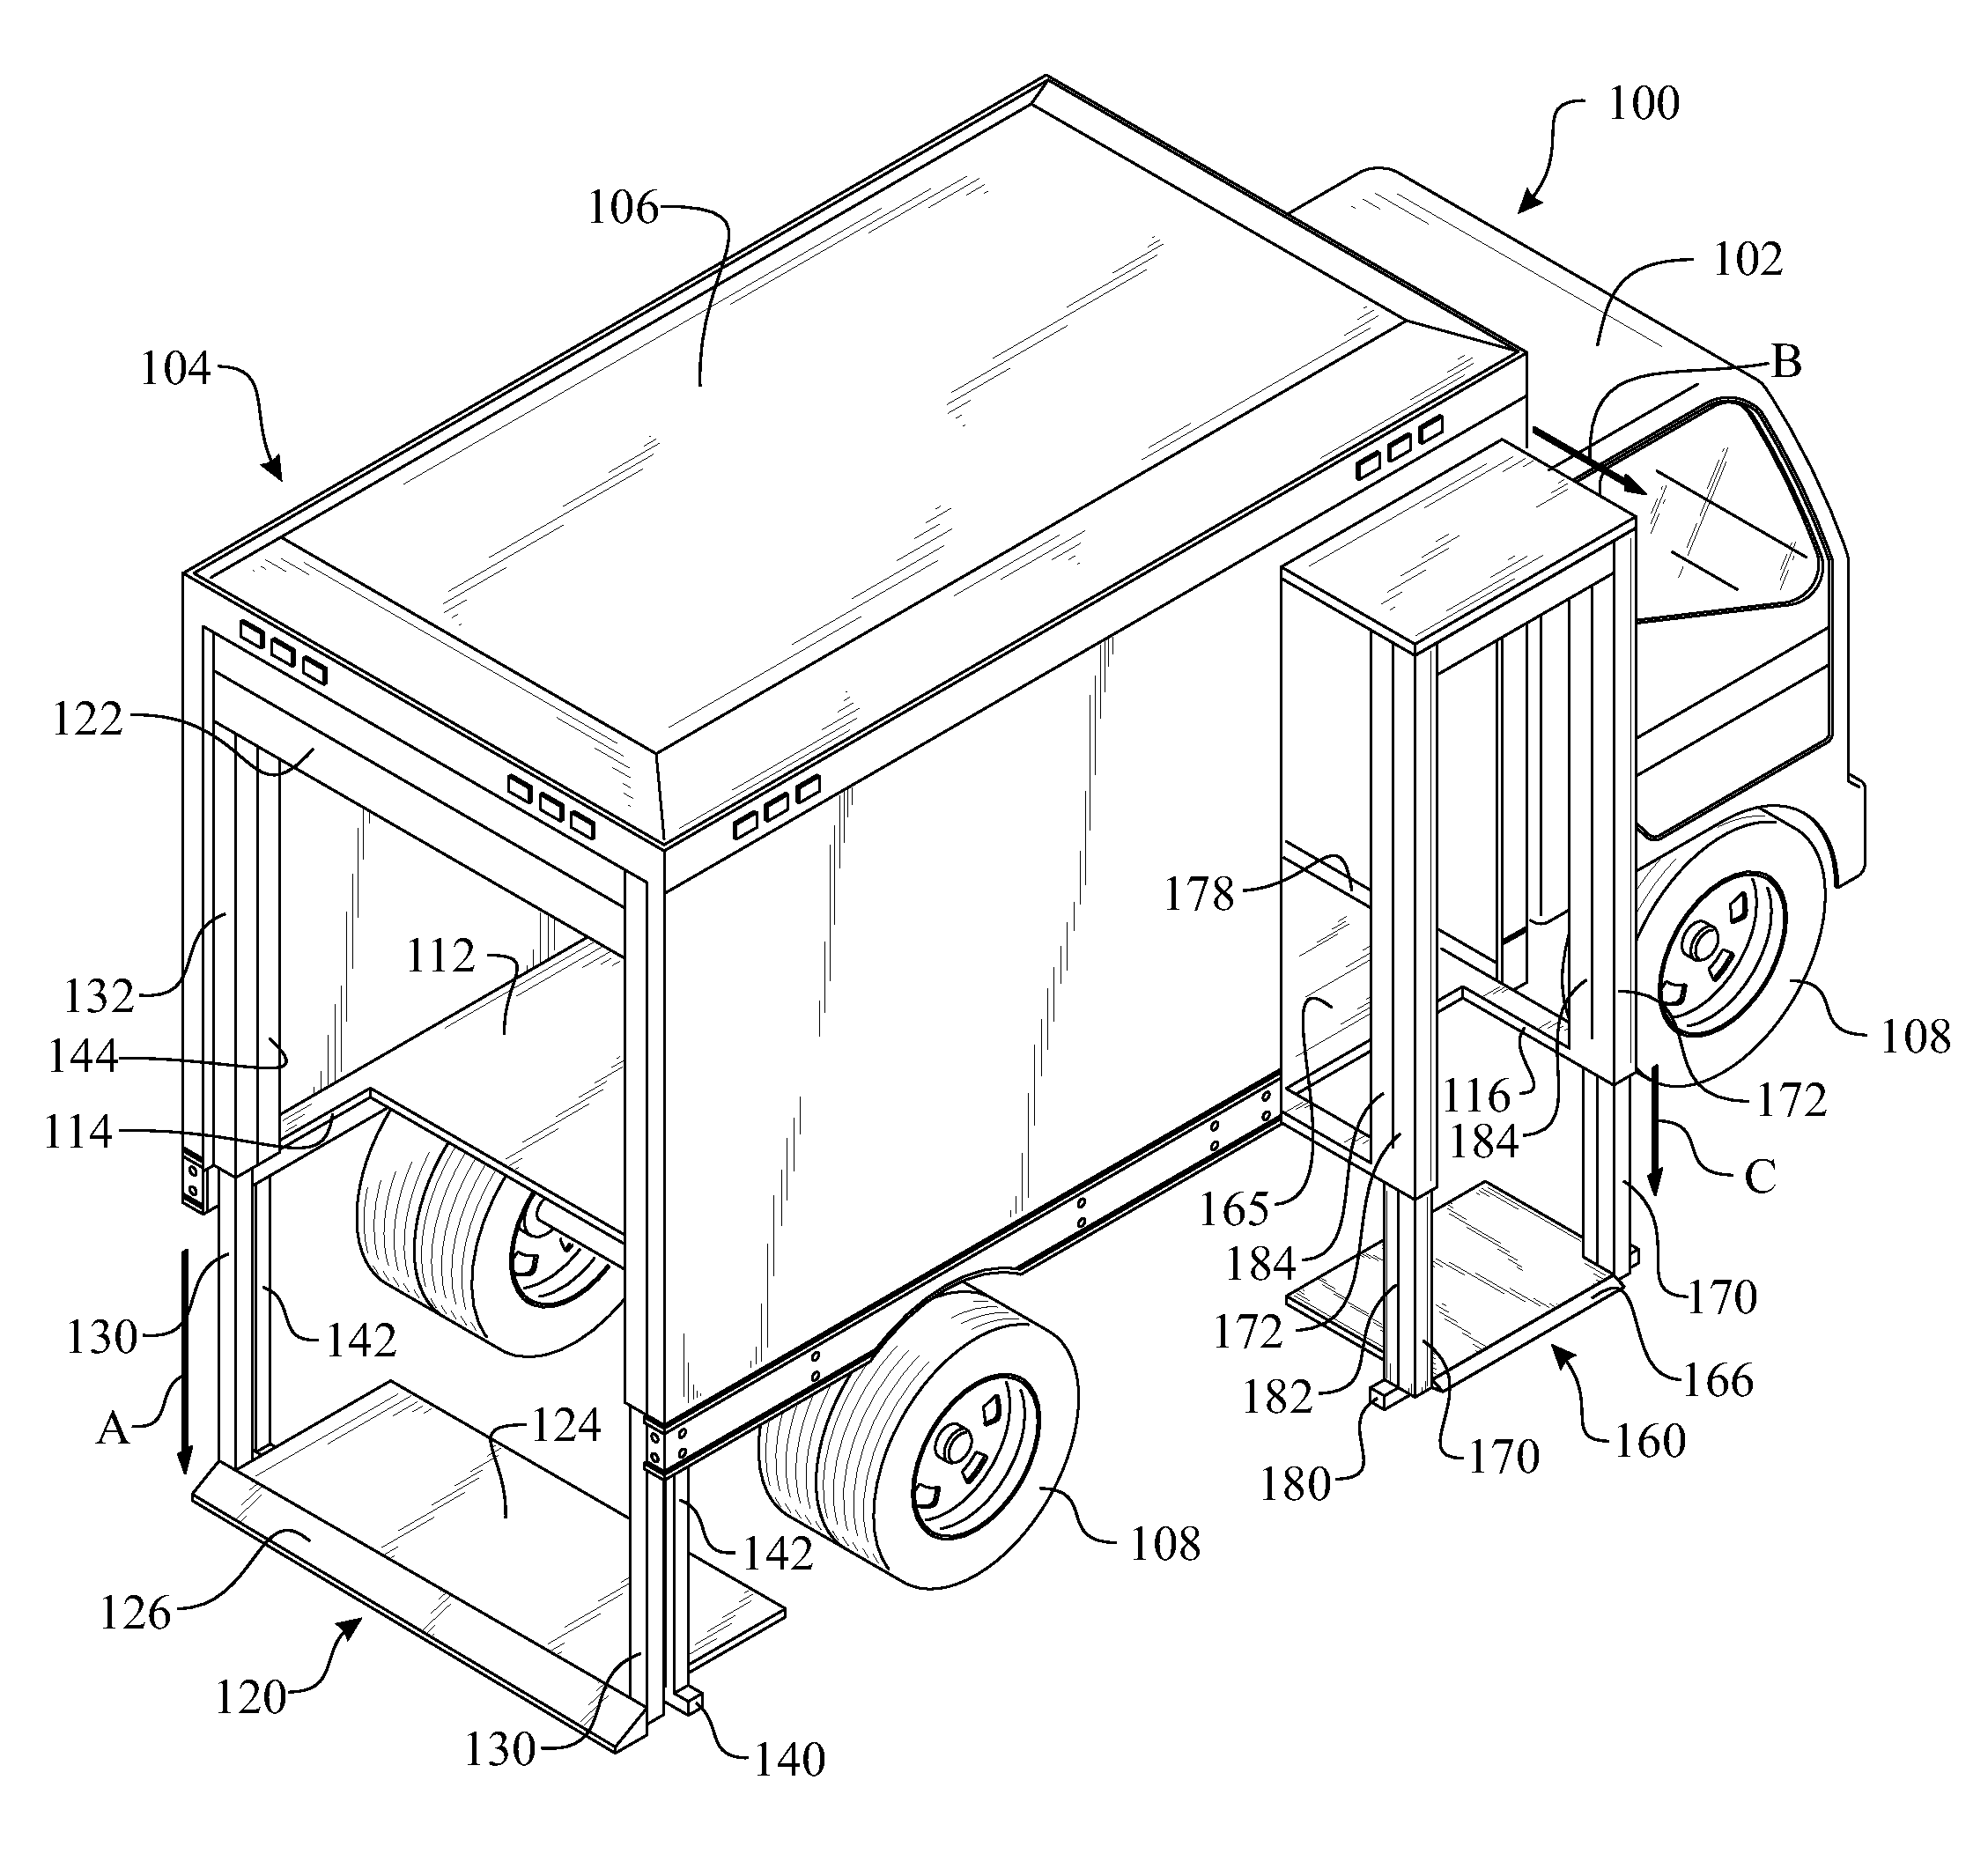 Cargo handling apparatus module